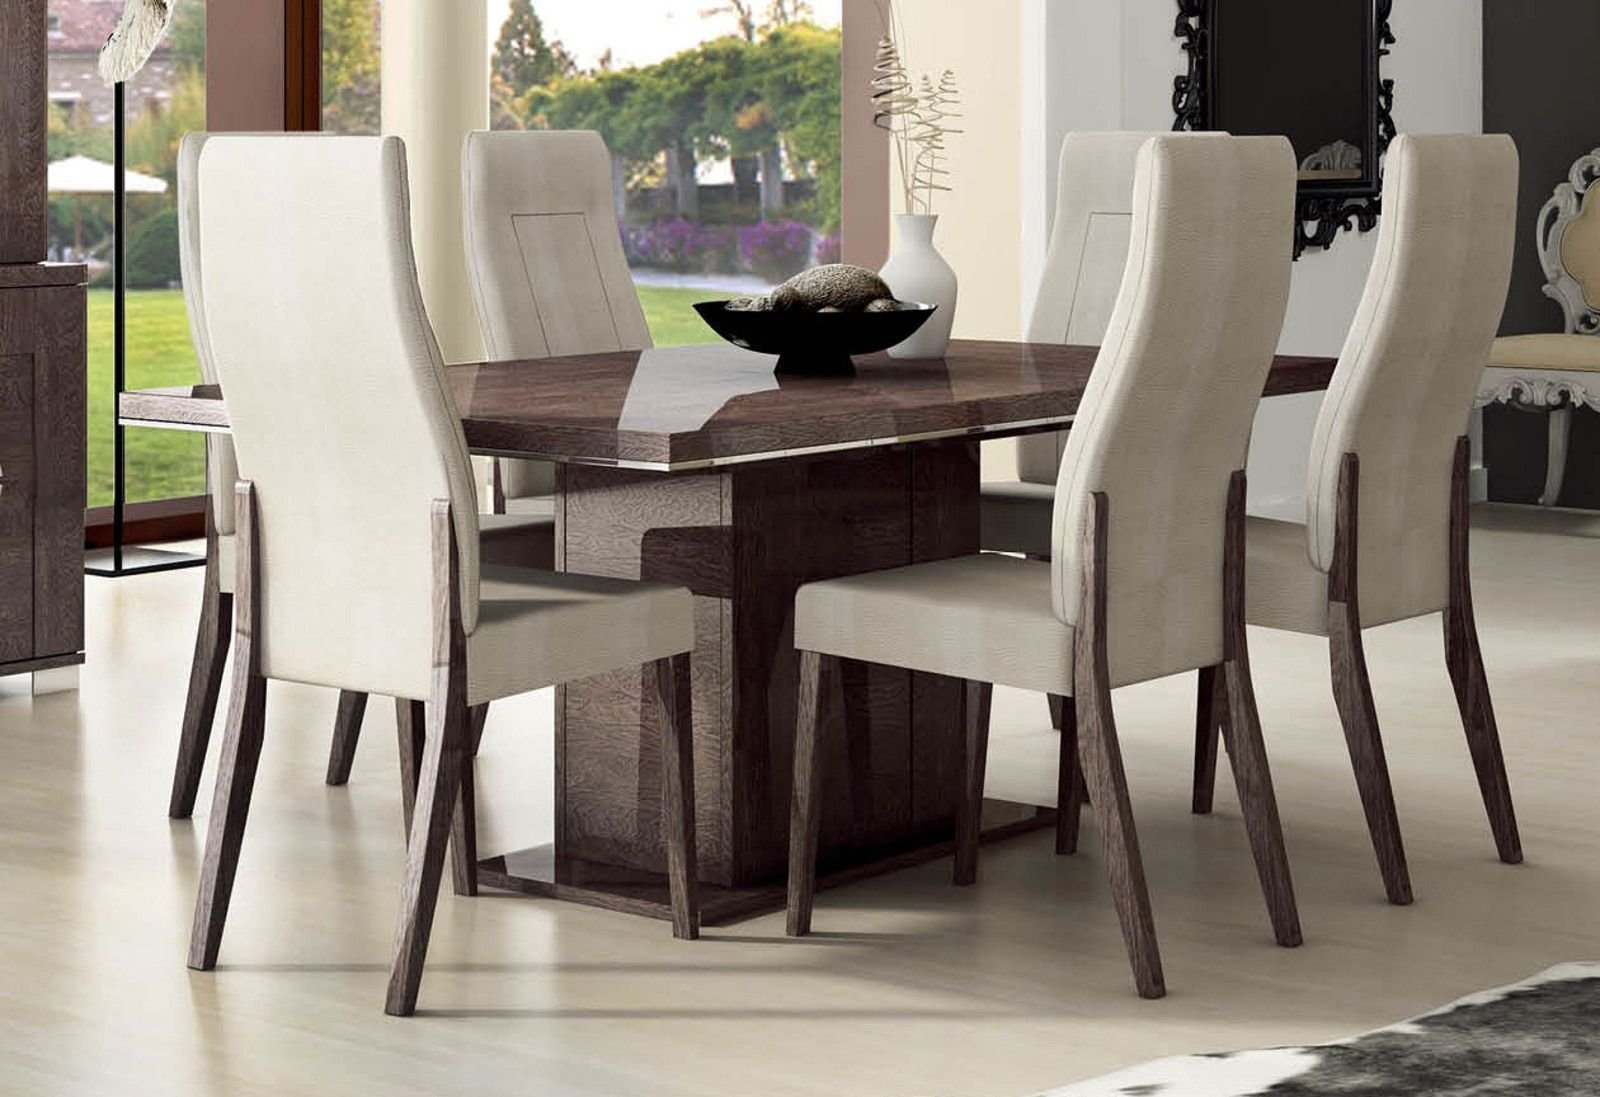 Мягкий стол стул. Стол обеденный Sagrada td 1397. Стол Caracas Dining Table. Обеденный стул Lenox Dining Chair. Стул Halmar k147.